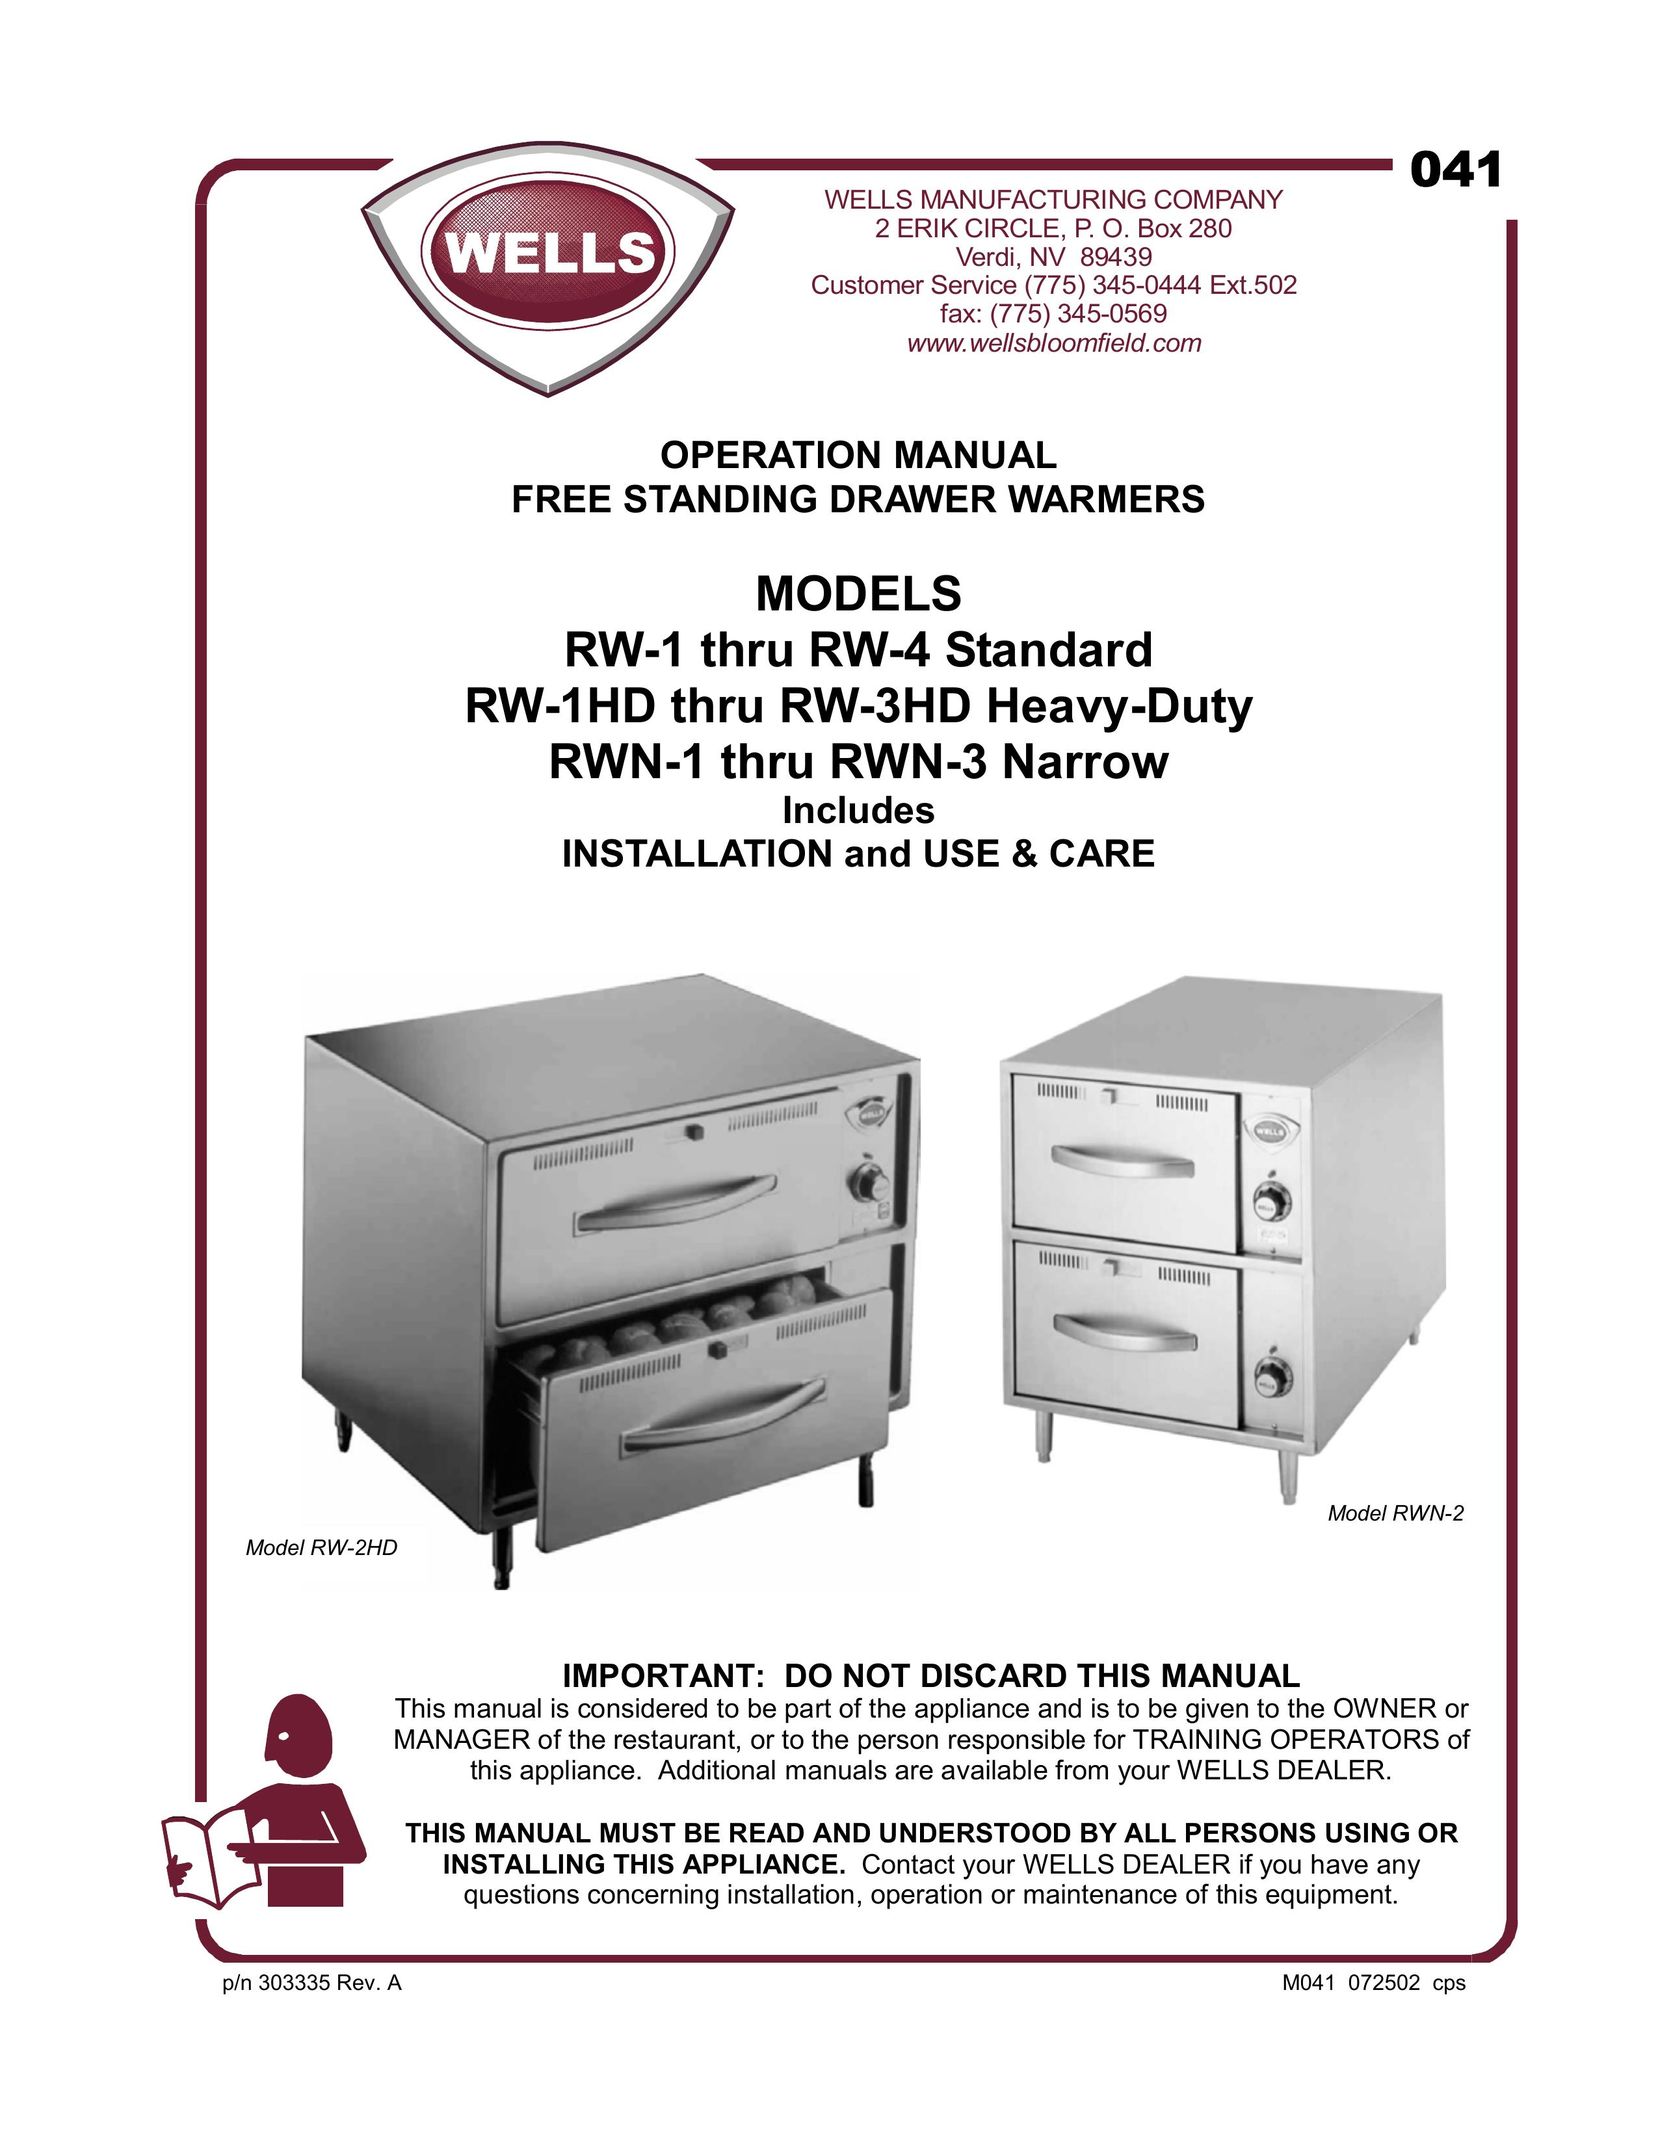 Wells RWN-1 thru RWN-3 Narrow Food Warmer User Manual